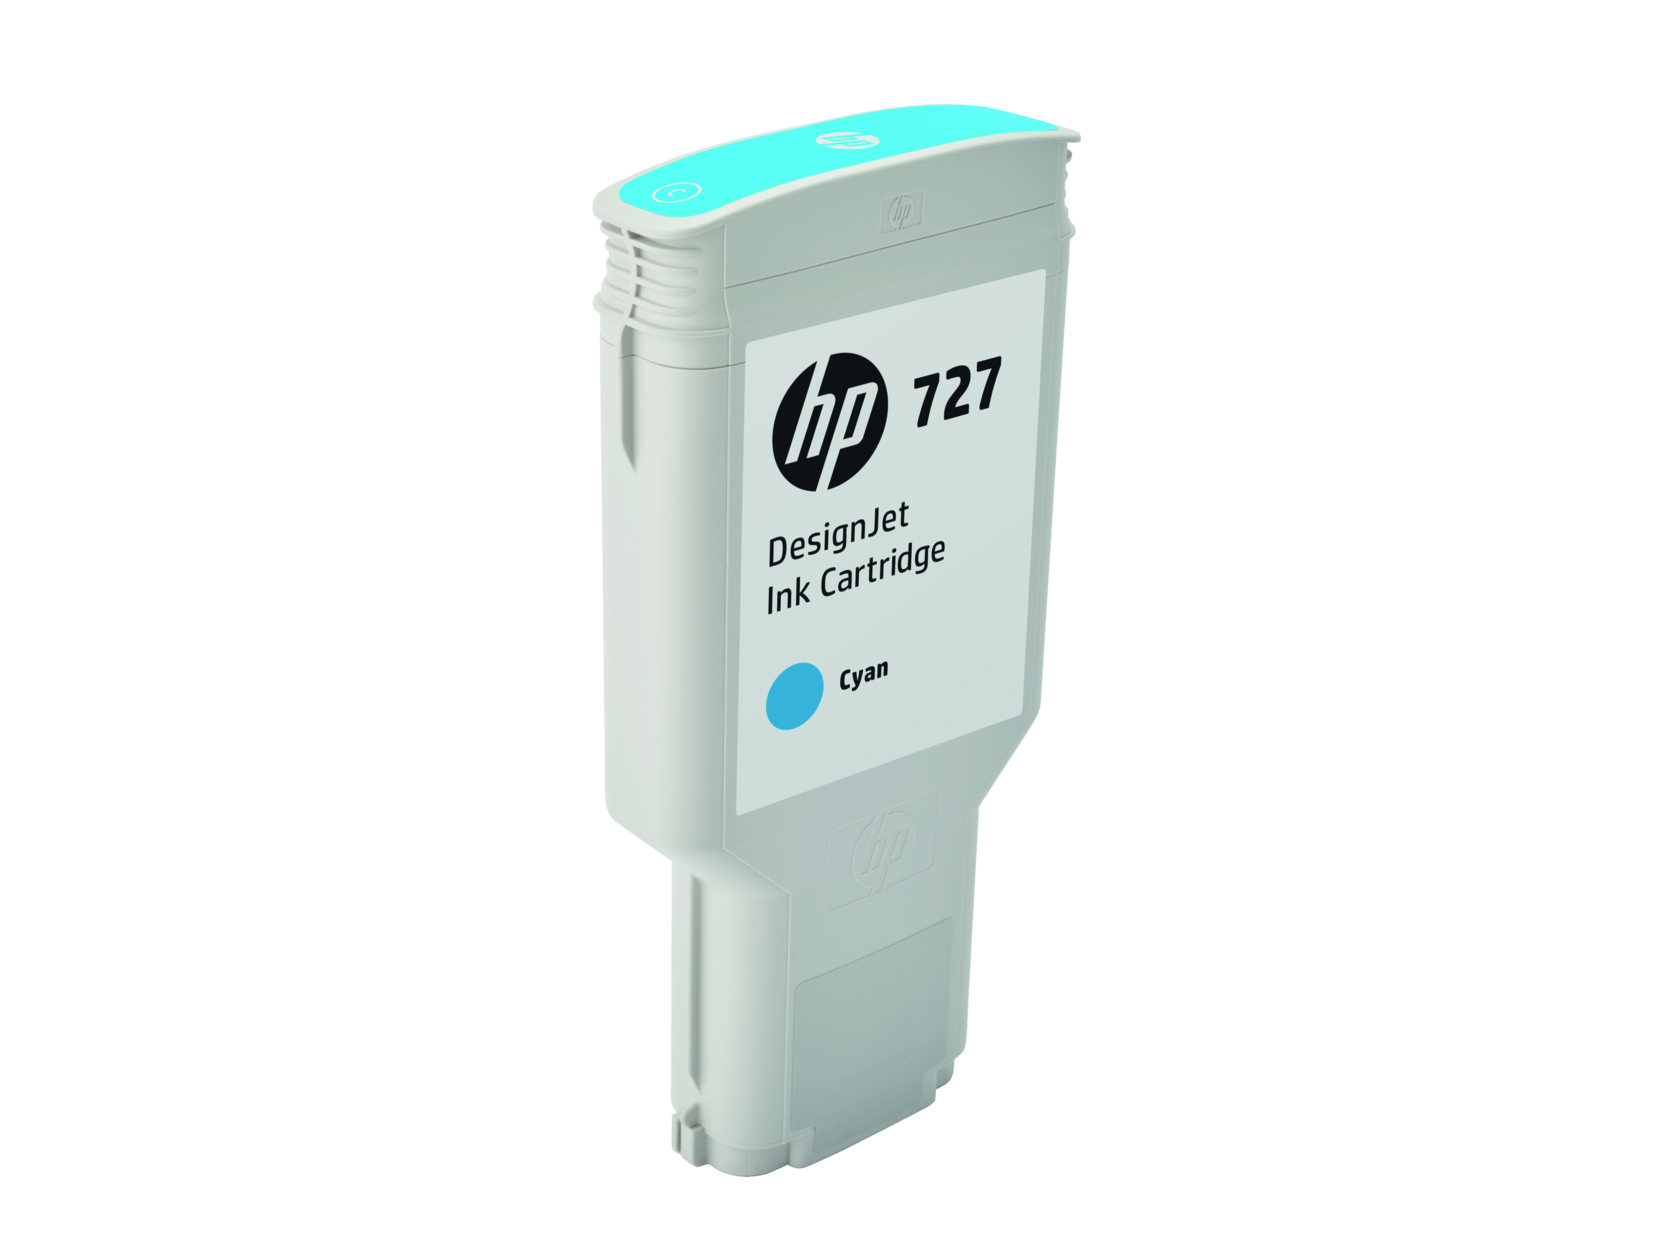 Картридж для печати HP Картридж HP 727 F9J76A вид печати струйный, цвет Голубой, емкость 300мл.